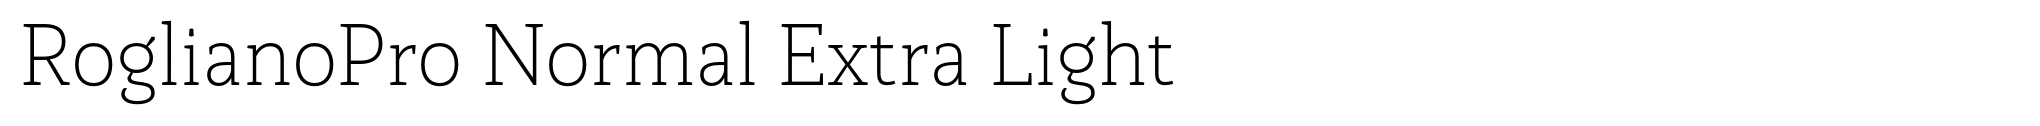 RoglianoPro Normal Extra Light image